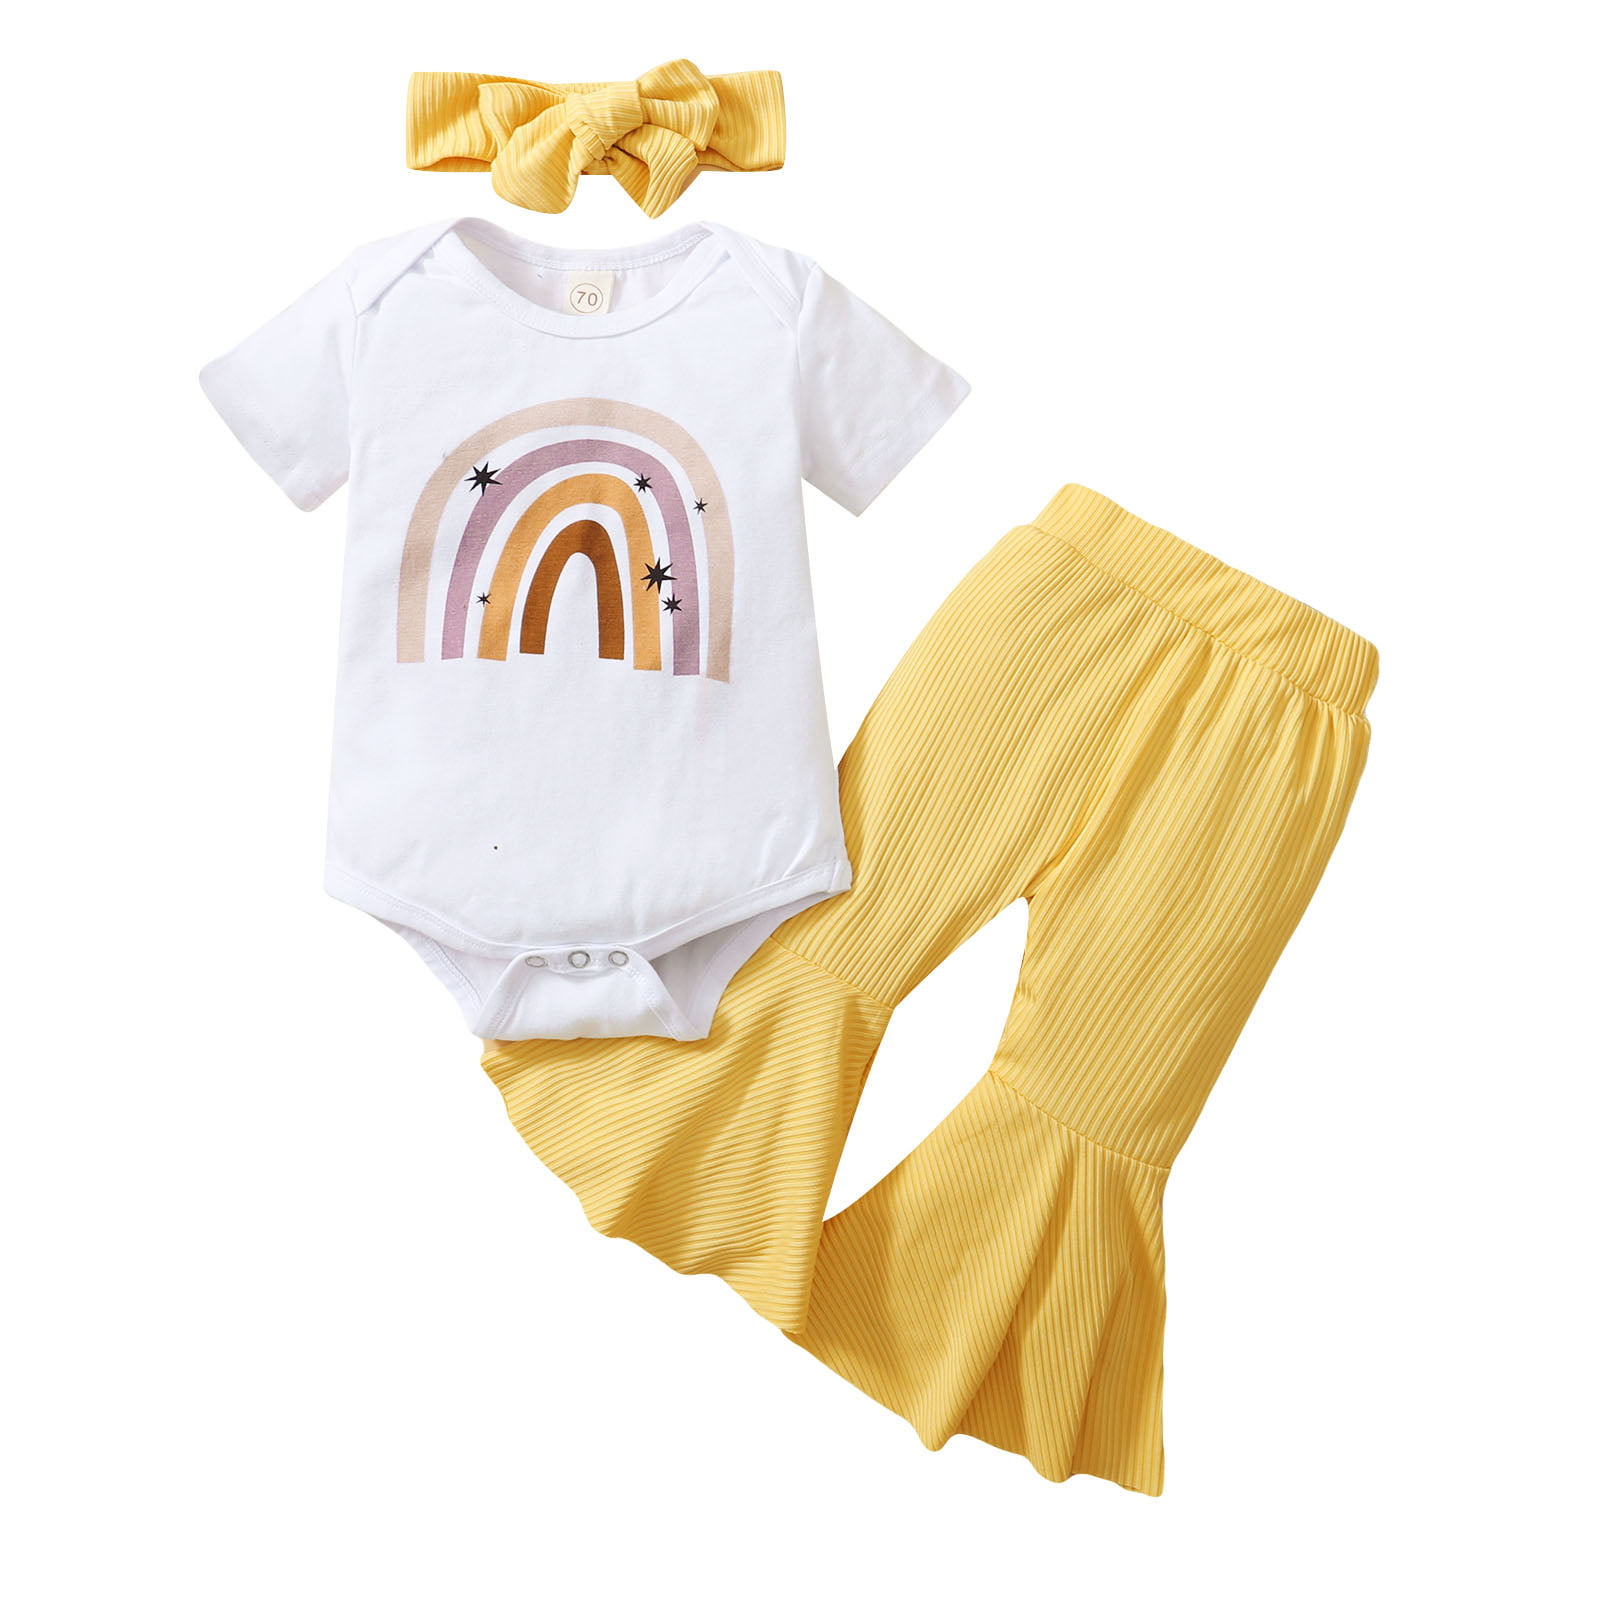 squarex Baby Girls Boys Letter Print Romper Jumpsuit Rainbow Pants Outfits Set